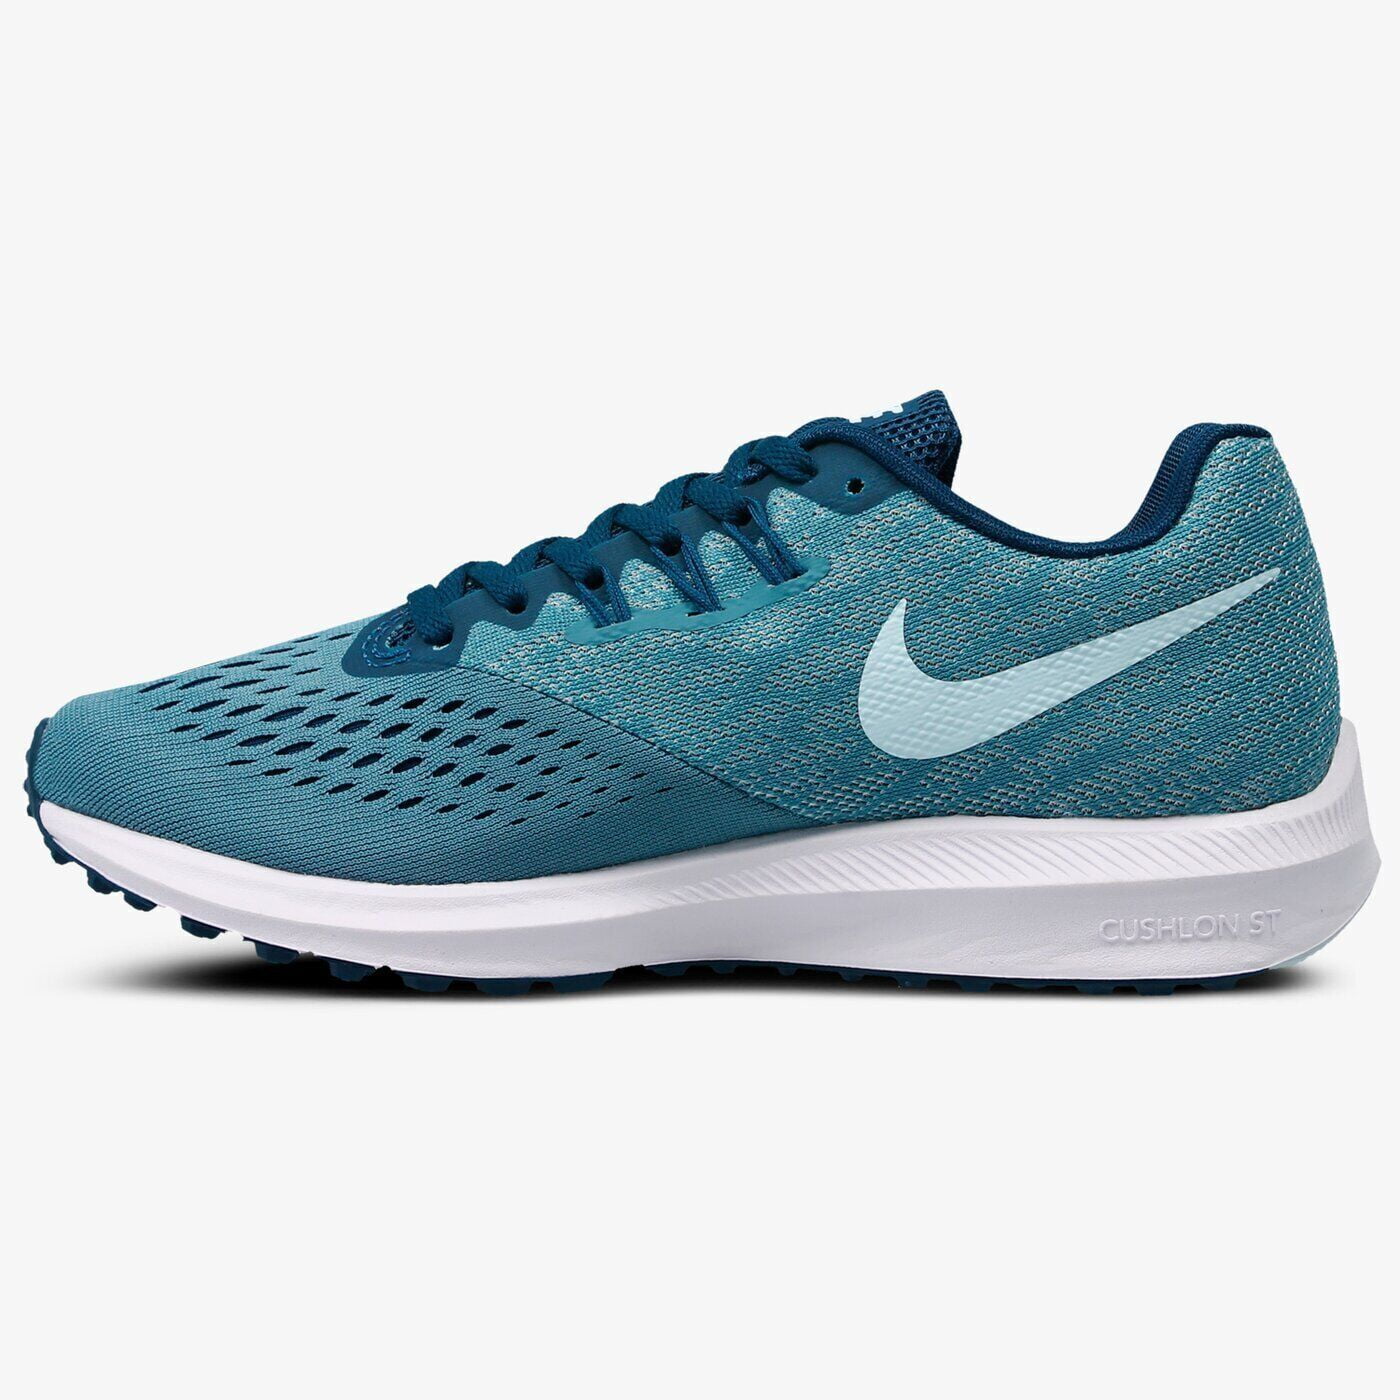 Bloquear portón Tacón Nike Zoom Winflo 4 898485-403 Women's Aqua & Blue Athletic Running Shoes  HS2331 (8.5) - Walmart.com